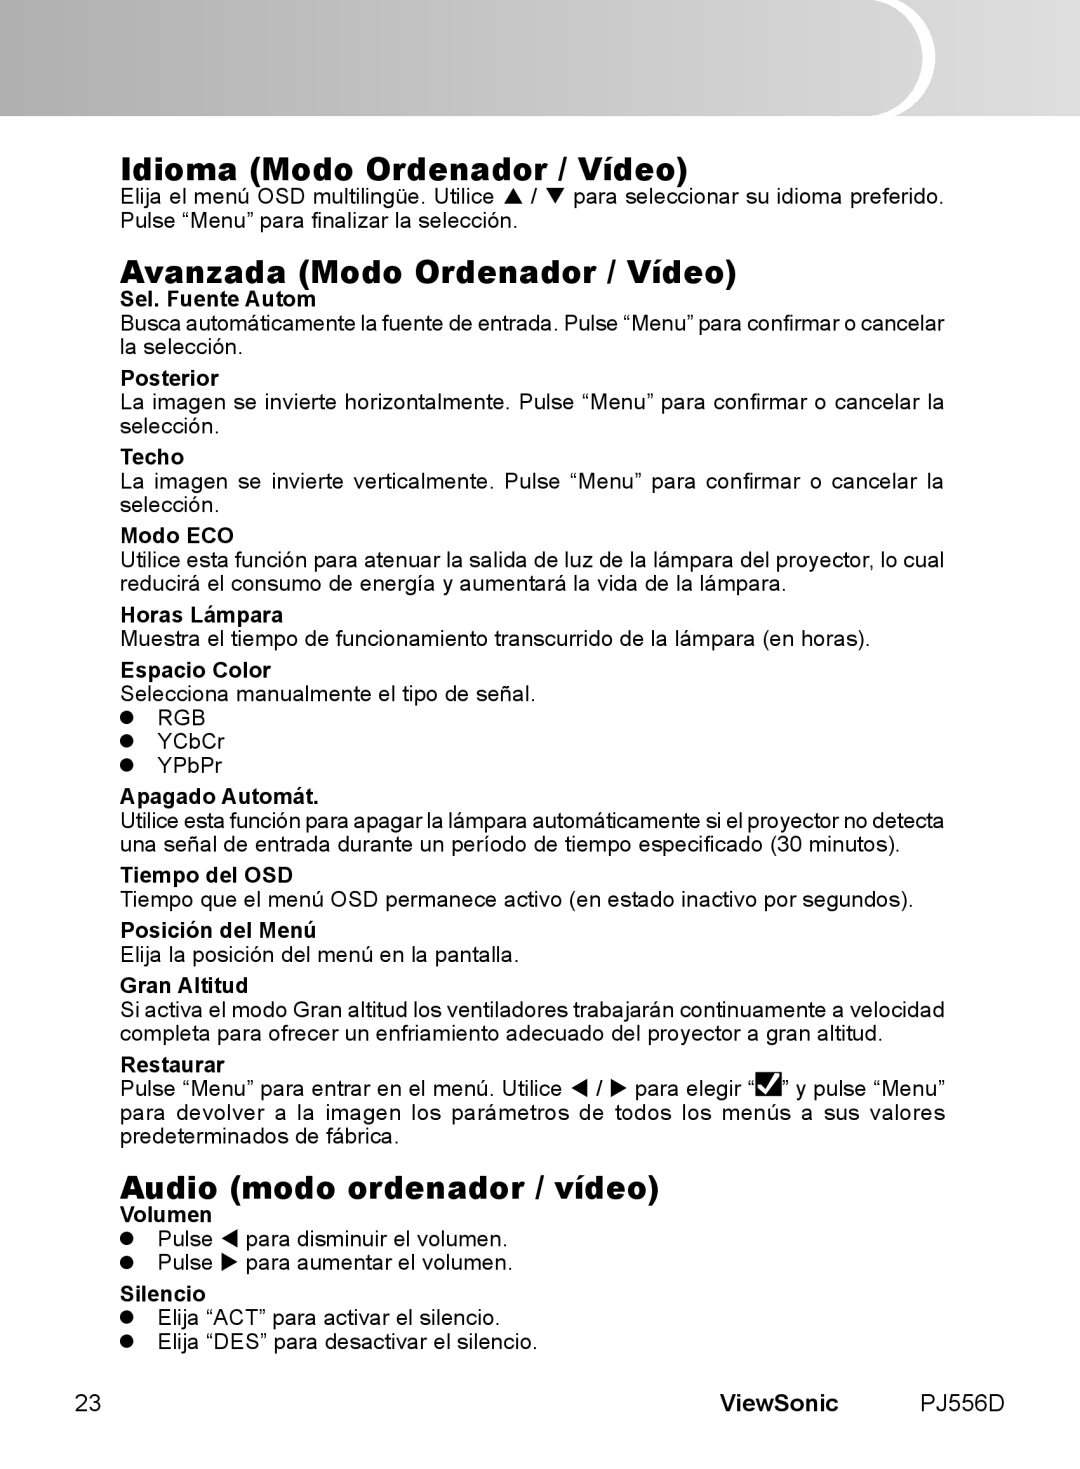 ViewSonic PJ556D Idioma Modo Ordenador / Vídeo, Avanzada Modo Ordenador / Vídeo, Audio modo ordenador / vídeo, ViewSonic 